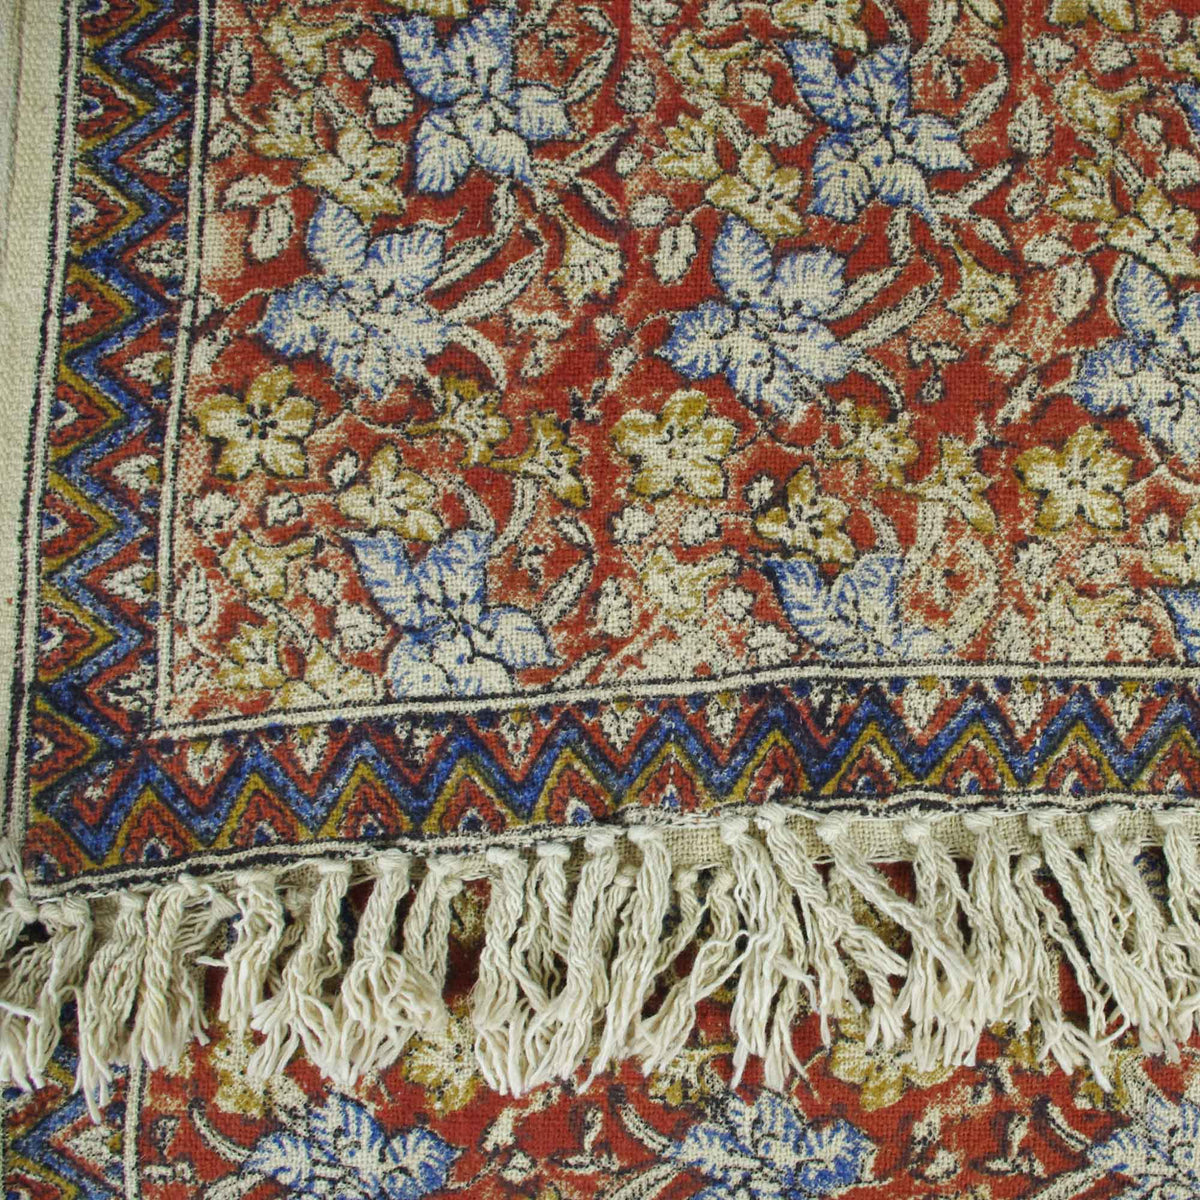 Handloom Mud Cloth Block Printed Cotton Sofa Throw With Tassels - Floral Print